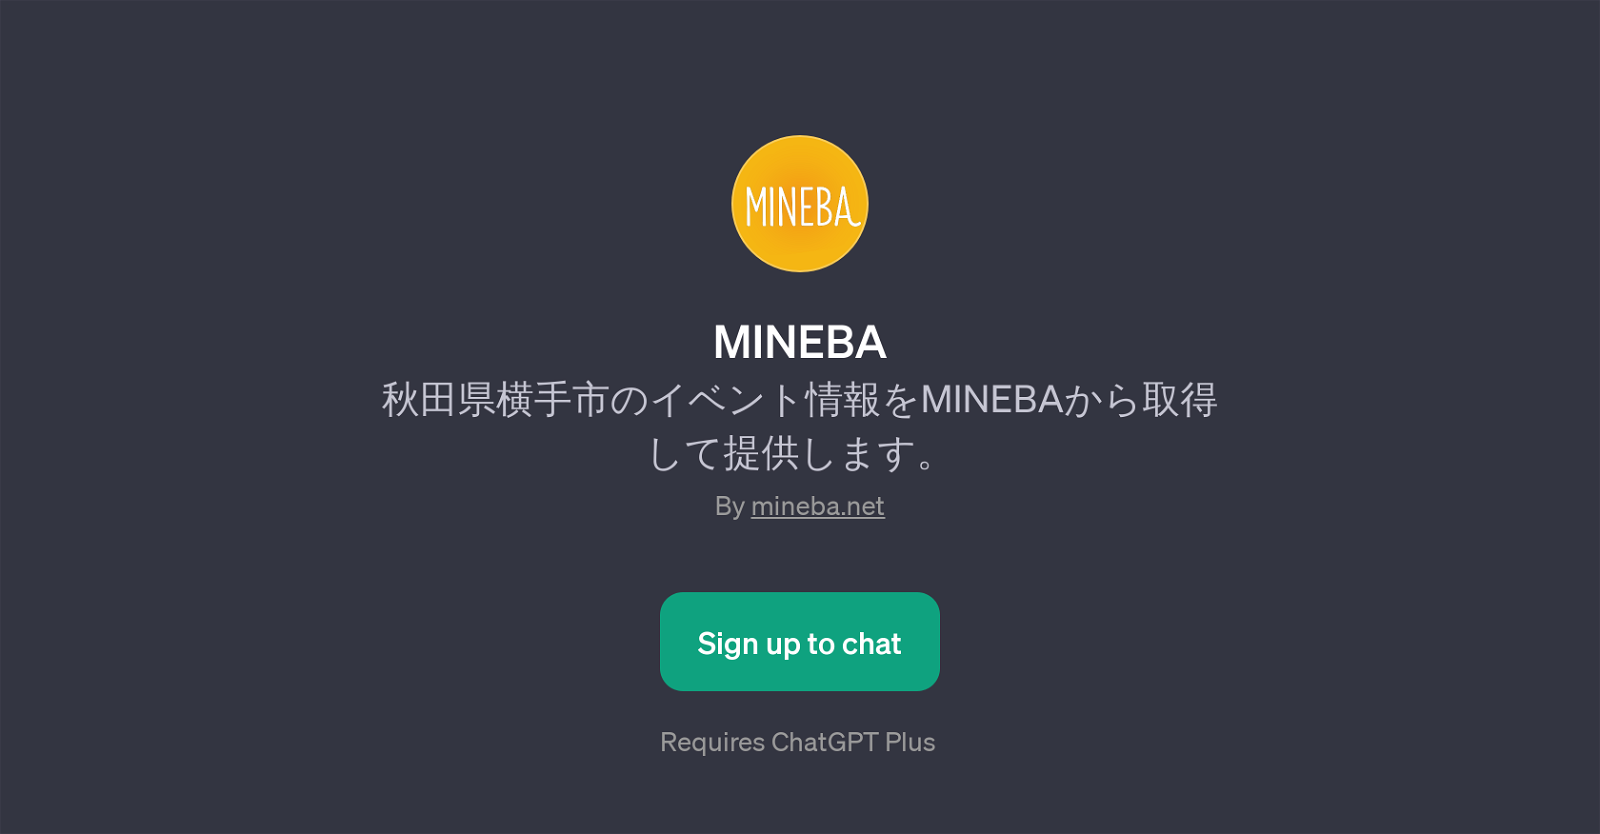 MINEBA website